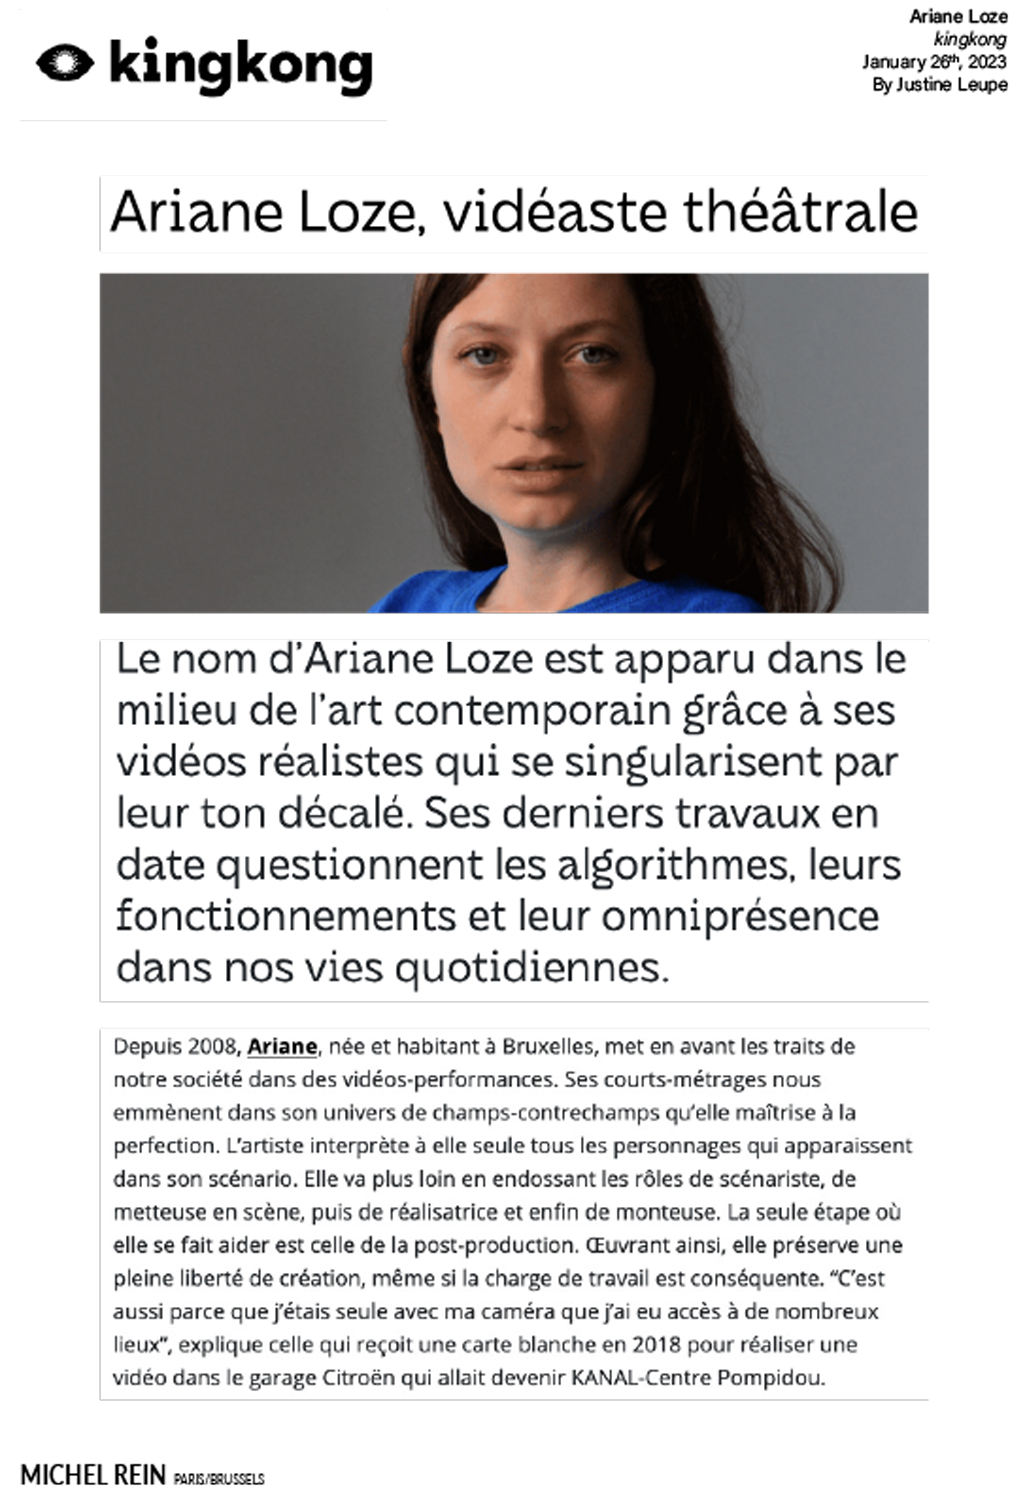 Ariane Loze, vidaste thtrale - kingkong